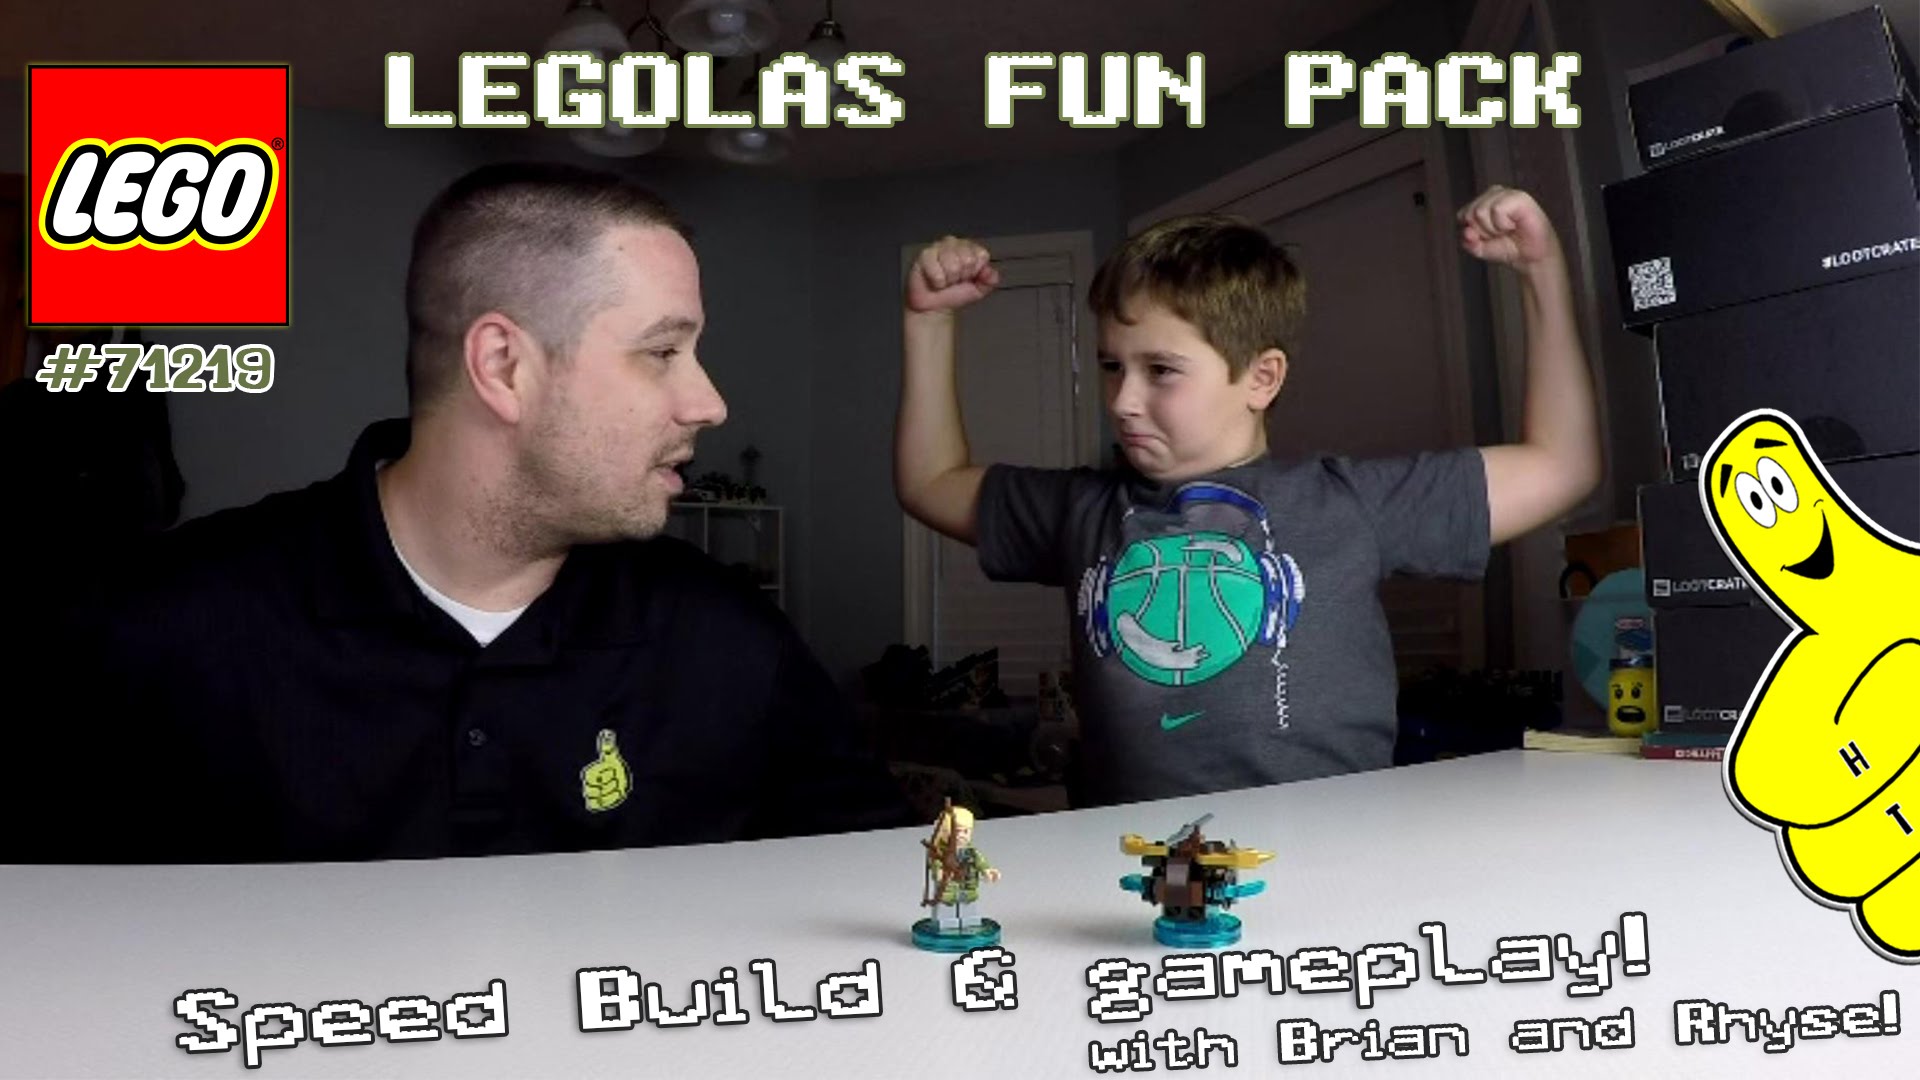 Lego Dimensions: #71219 Legolas Fun Pack and Speed Build – HTG